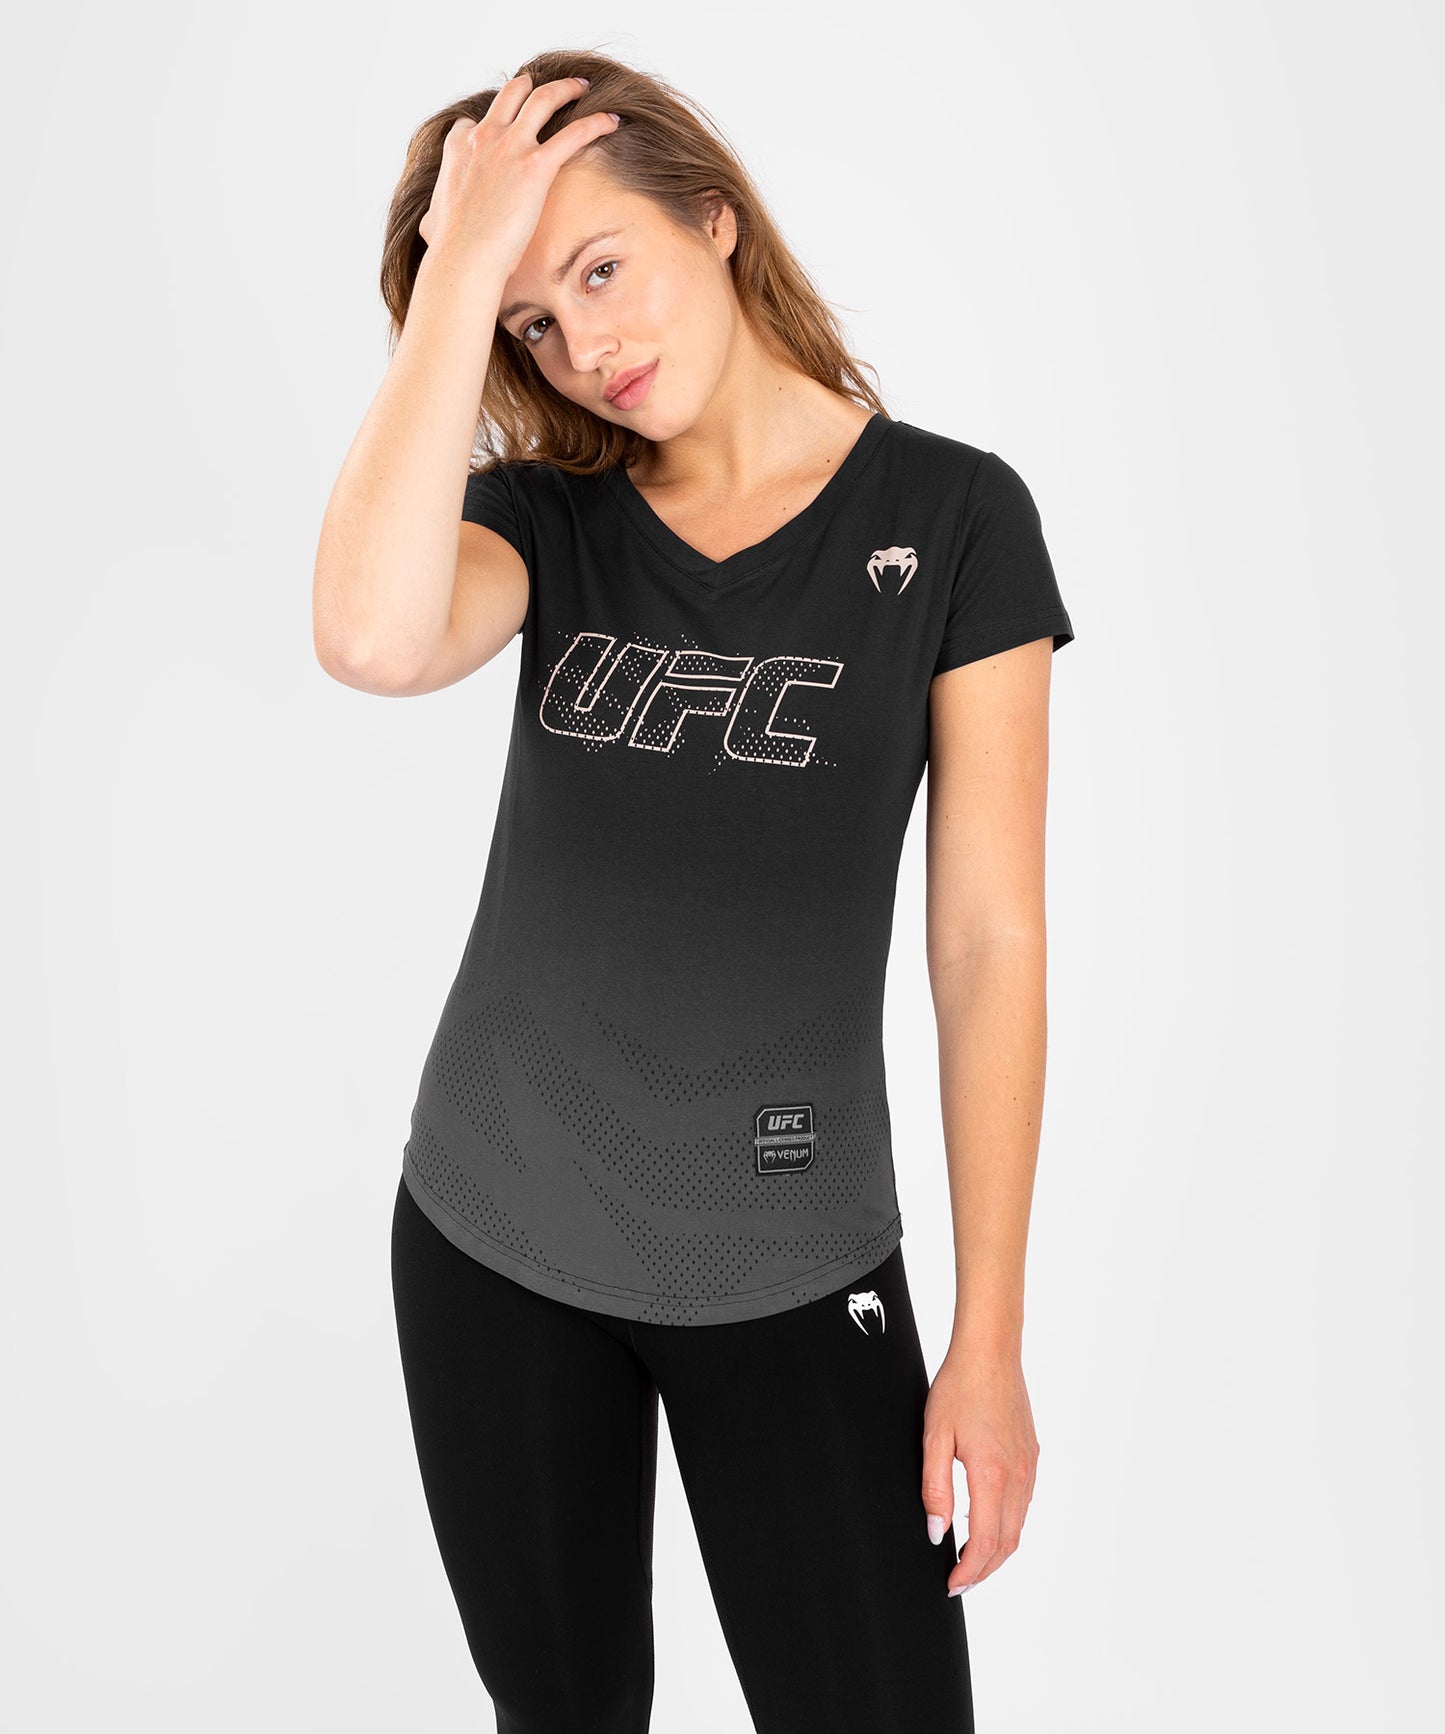 UFC Venum Authentic Fight Week  Women's Short Sleeve T-shirt - Black